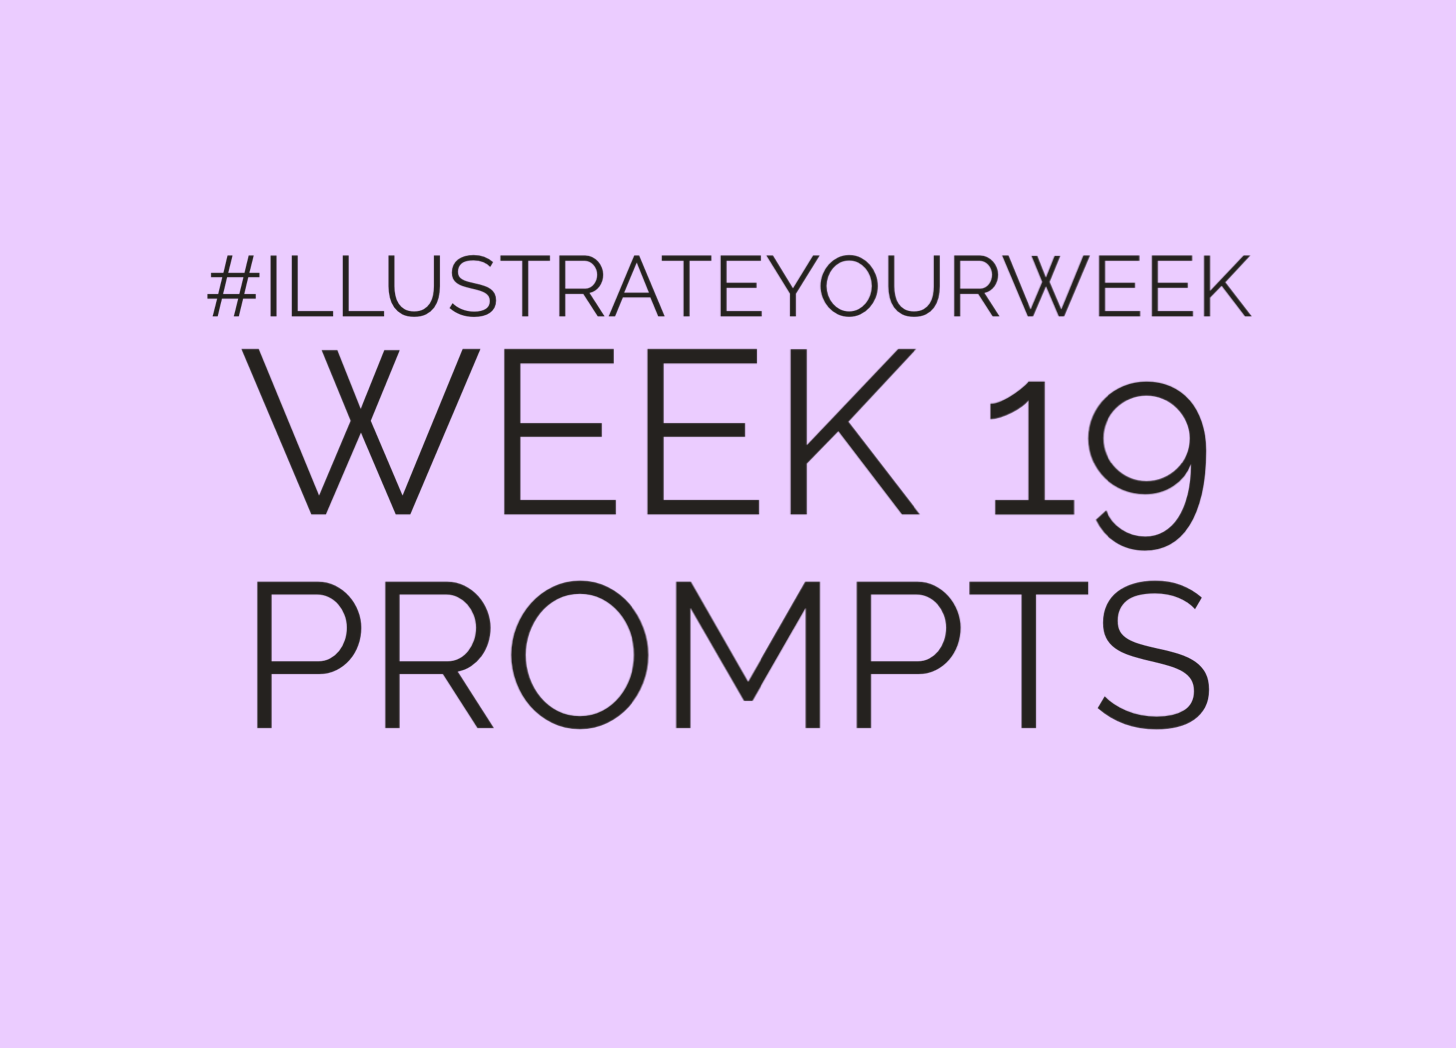 Illustrate Your Week Week 19 Prompts (headline only)